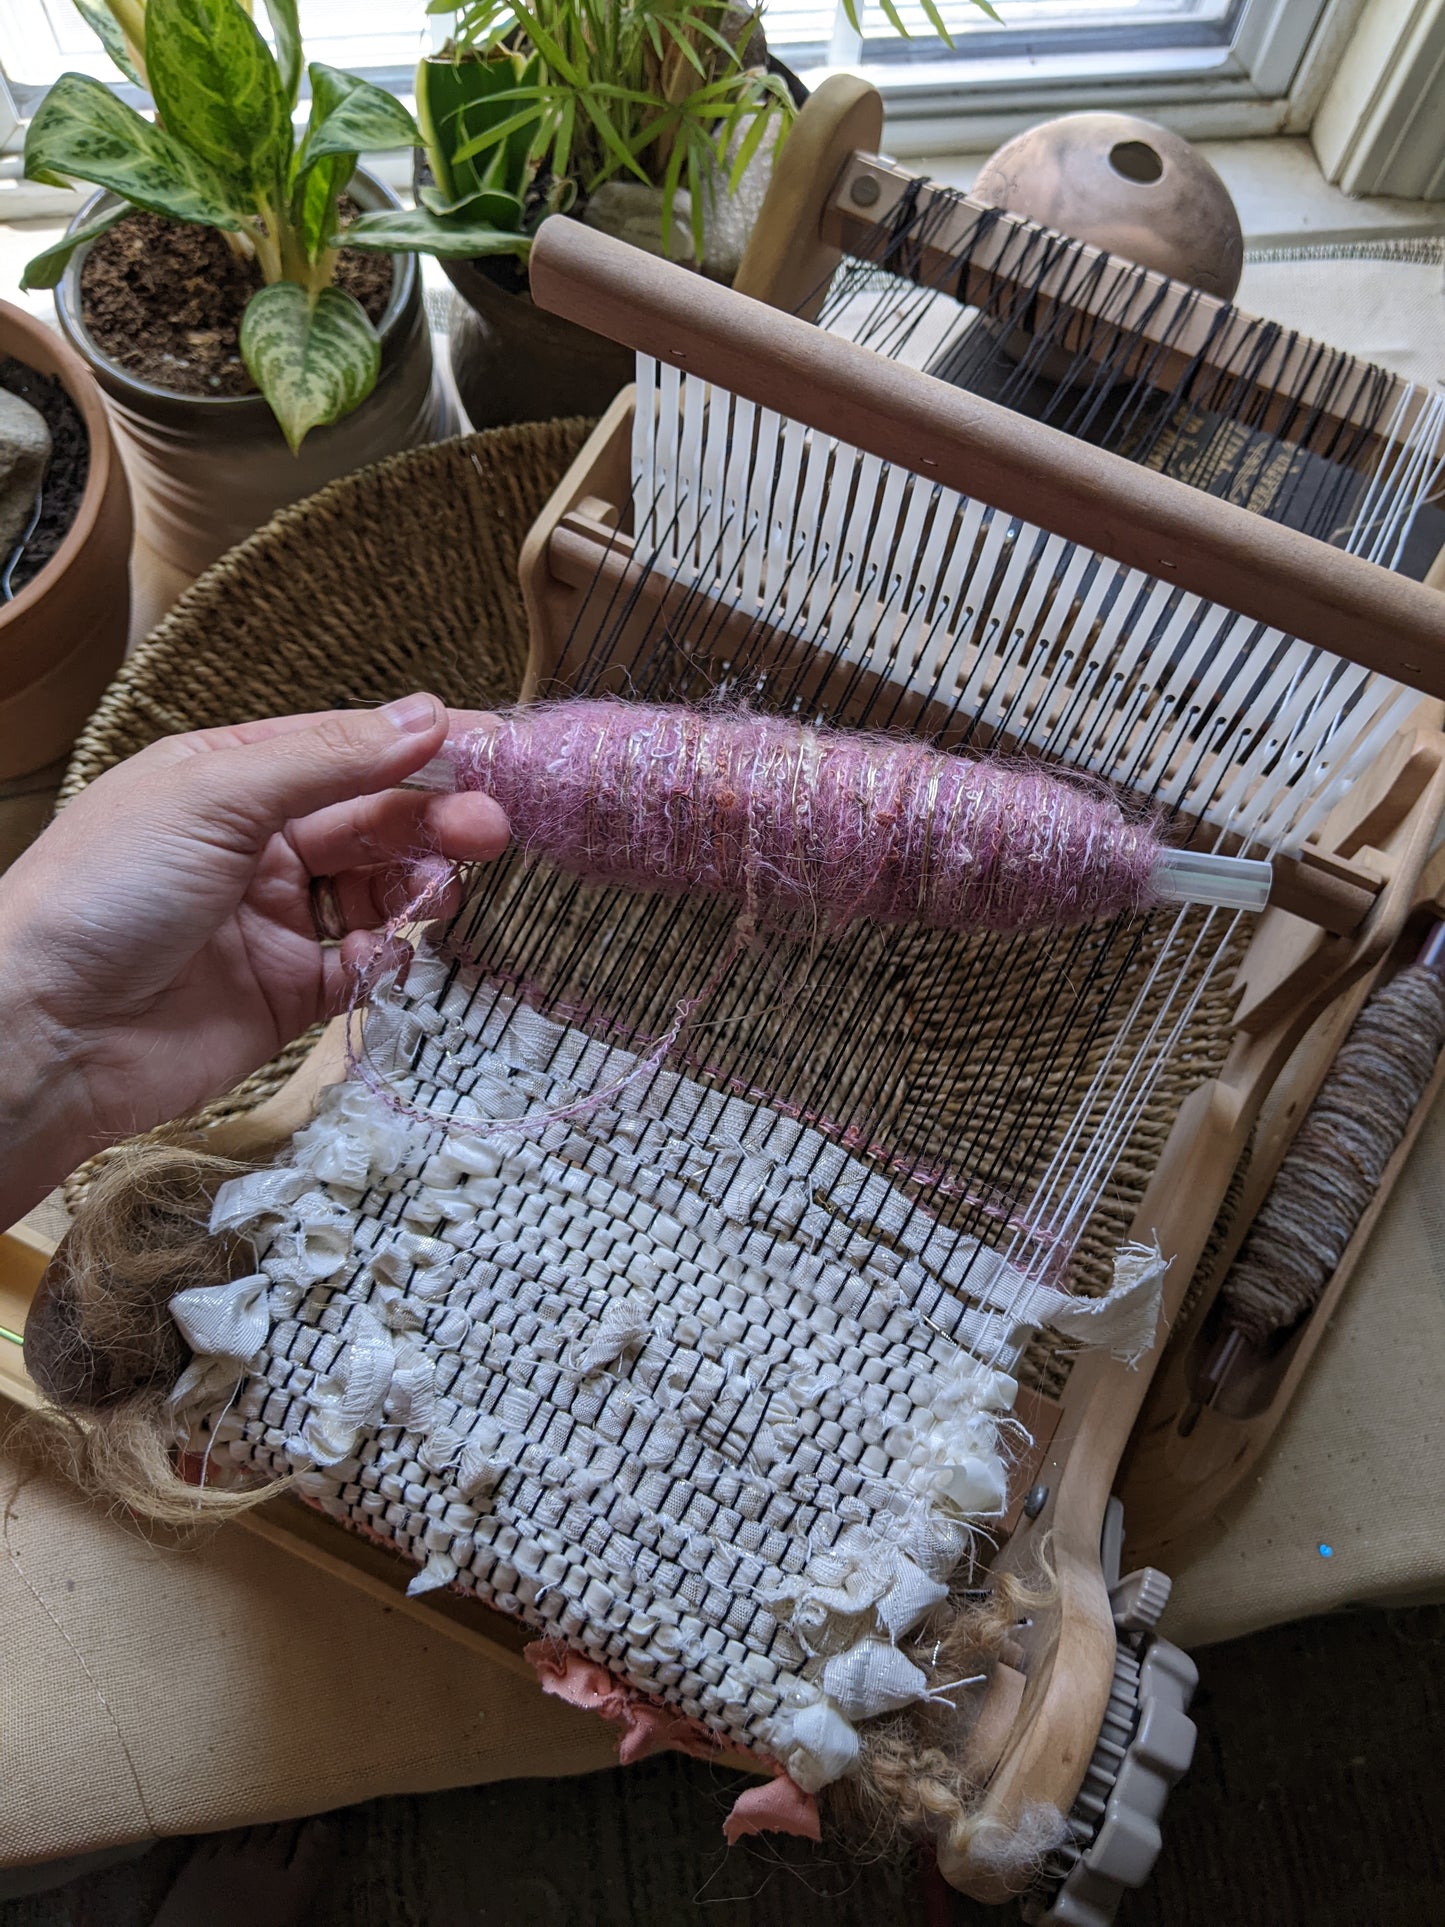 Plying and Weaving Textured Yarn Bobbins (Lot 7)